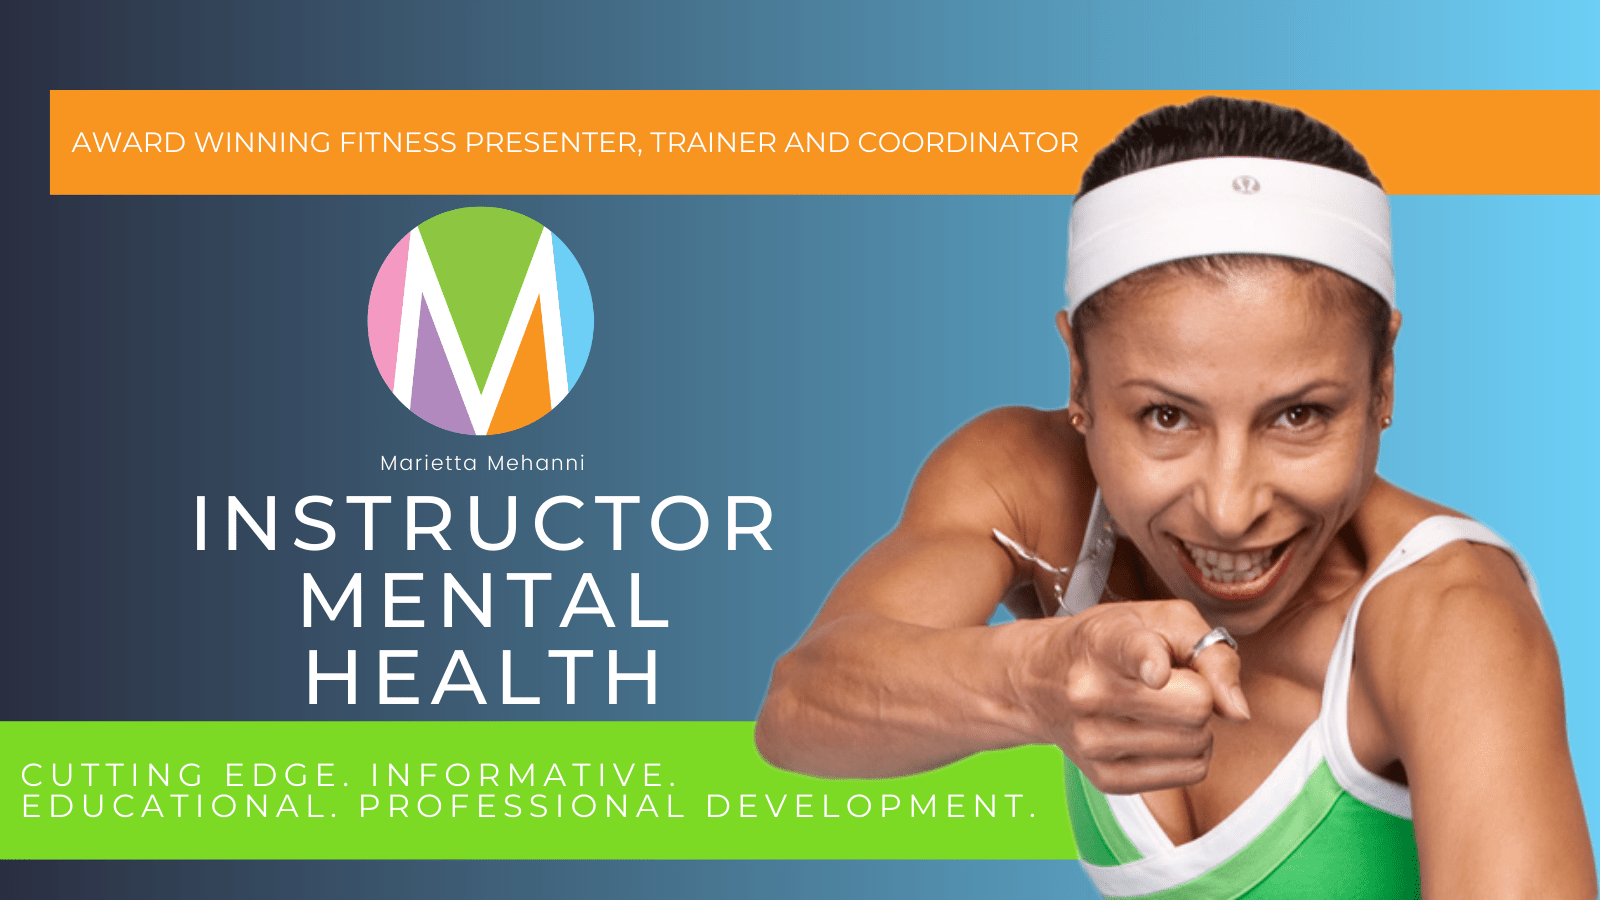 blog instructor mental health marietta mehanni education professional development group fitness personal training informative fitness guru presenter